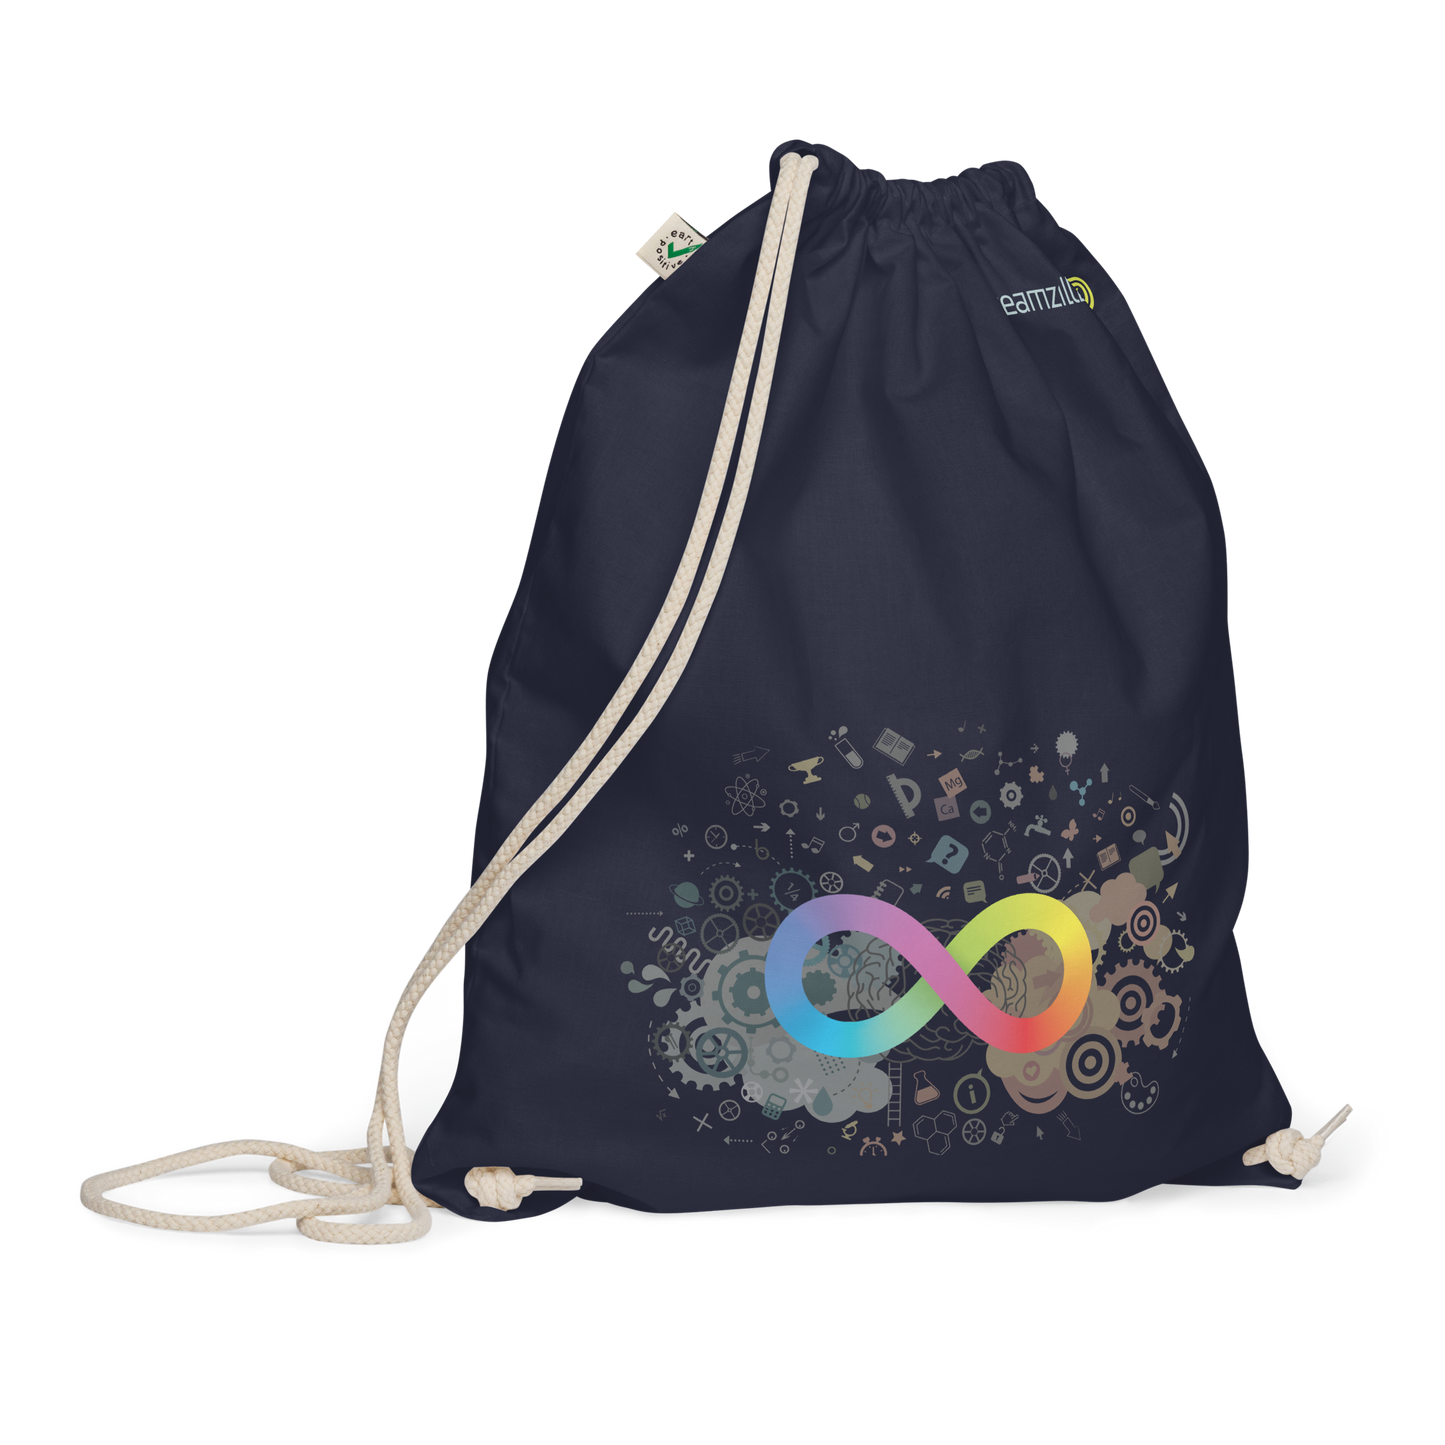 Neurodiversity Rainbow Infinity EarthPositive Cotton Drawstring Bag in Navy